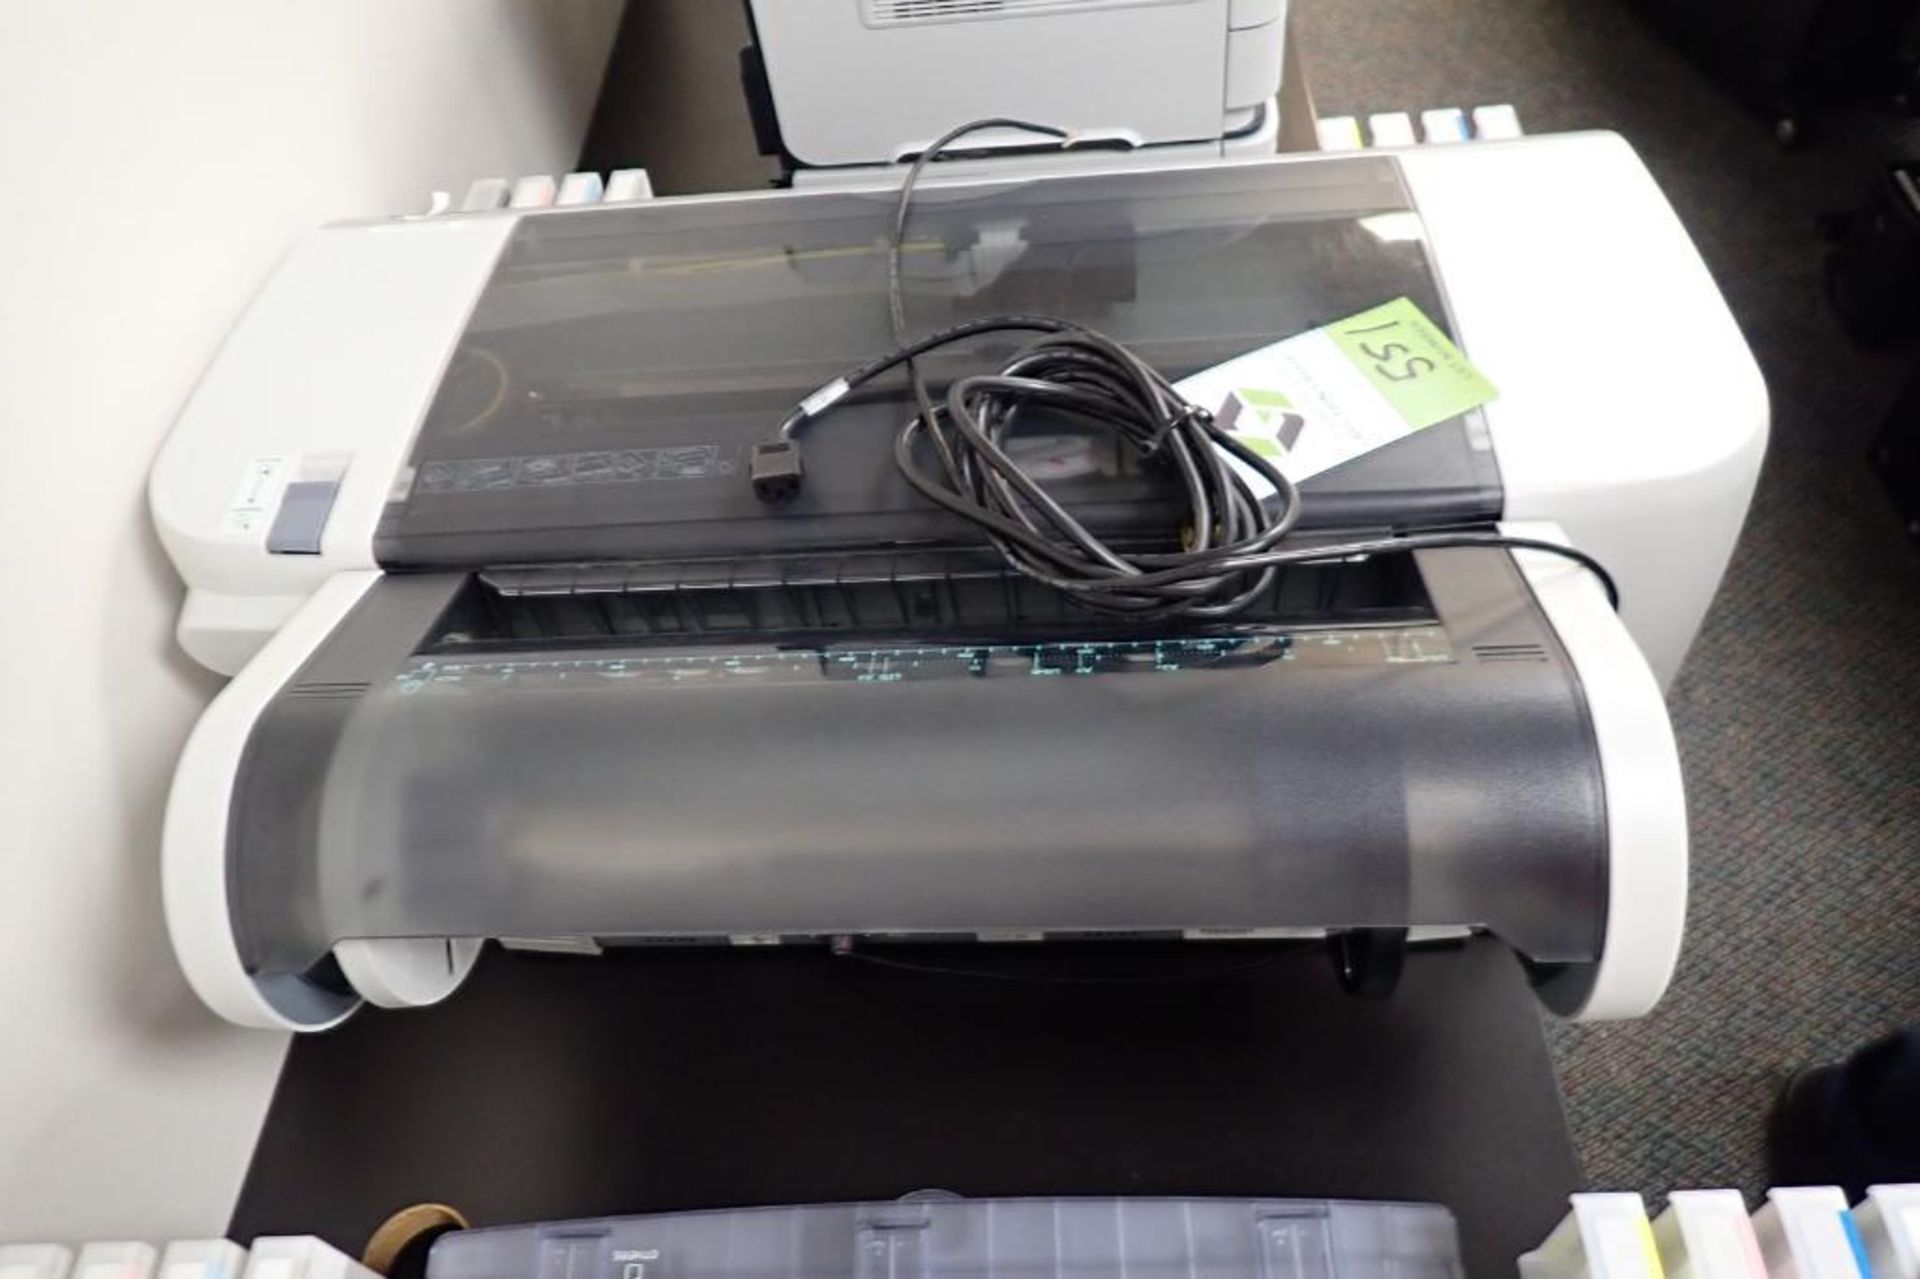 Epson stylus pro 4880 ink jet printer - Image 4 of 5